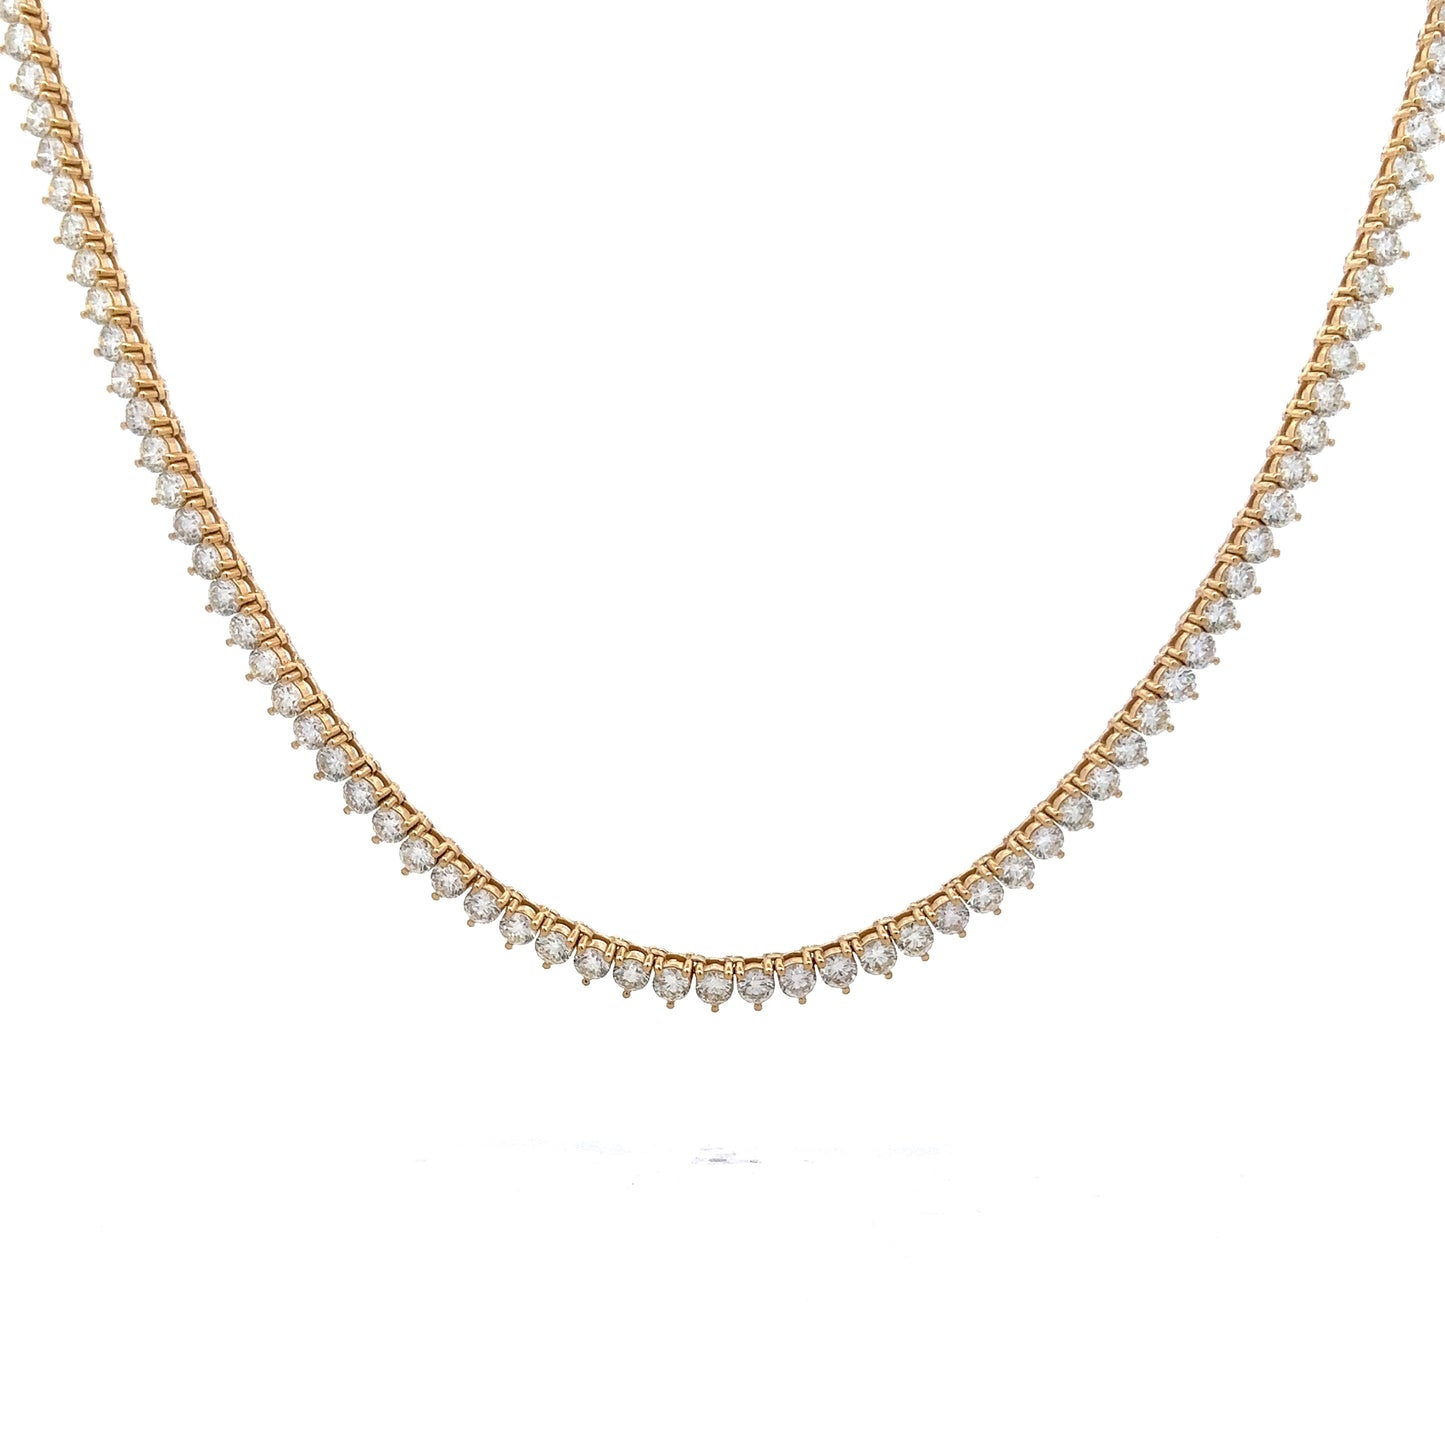 15 Carat Diamond Tennis Necklace in 14k Yellow Gold